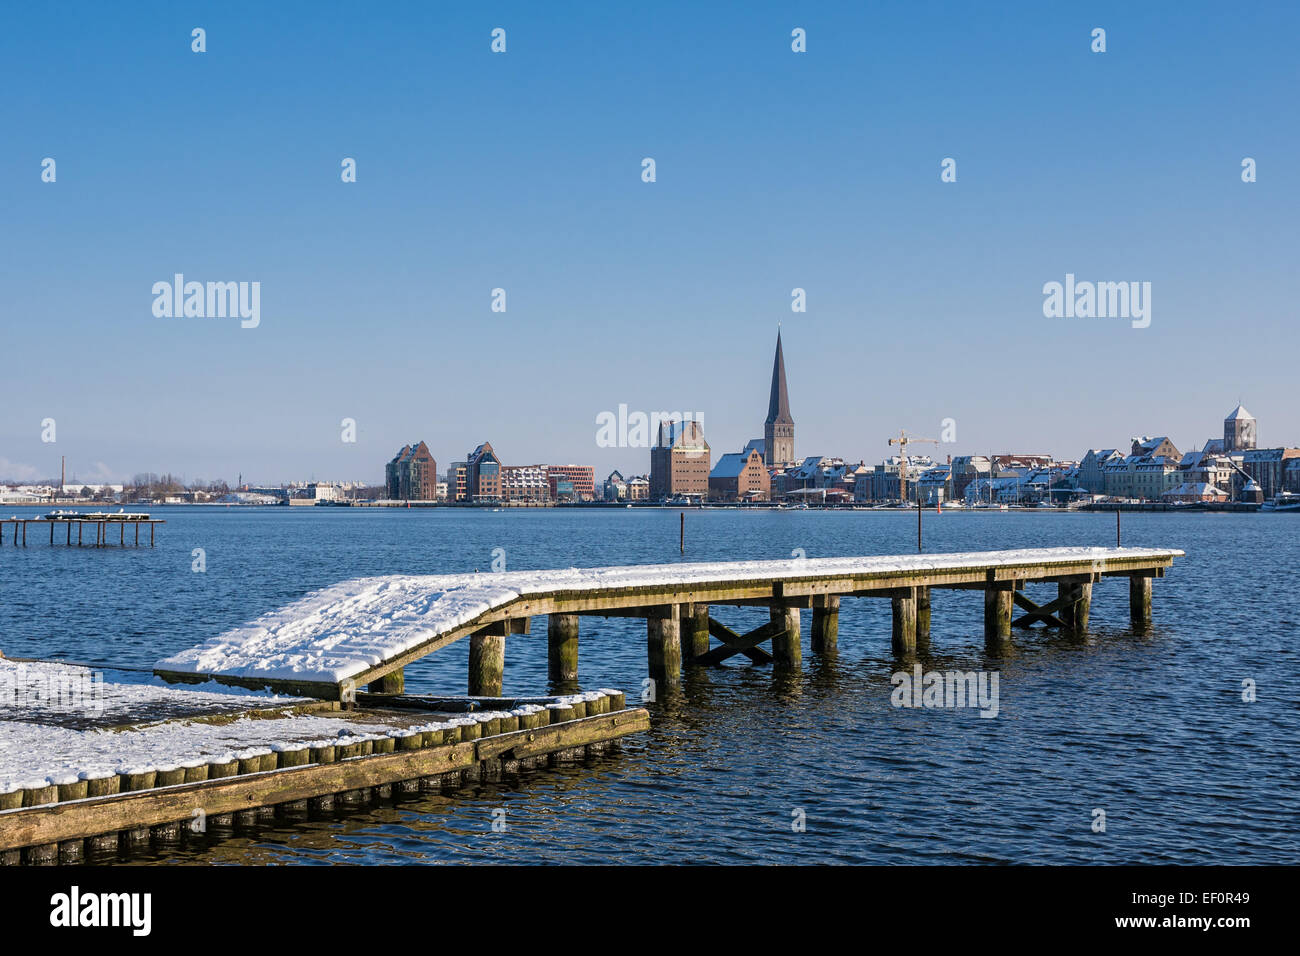 Rostock (Germany) in Winter time. Stock Photo